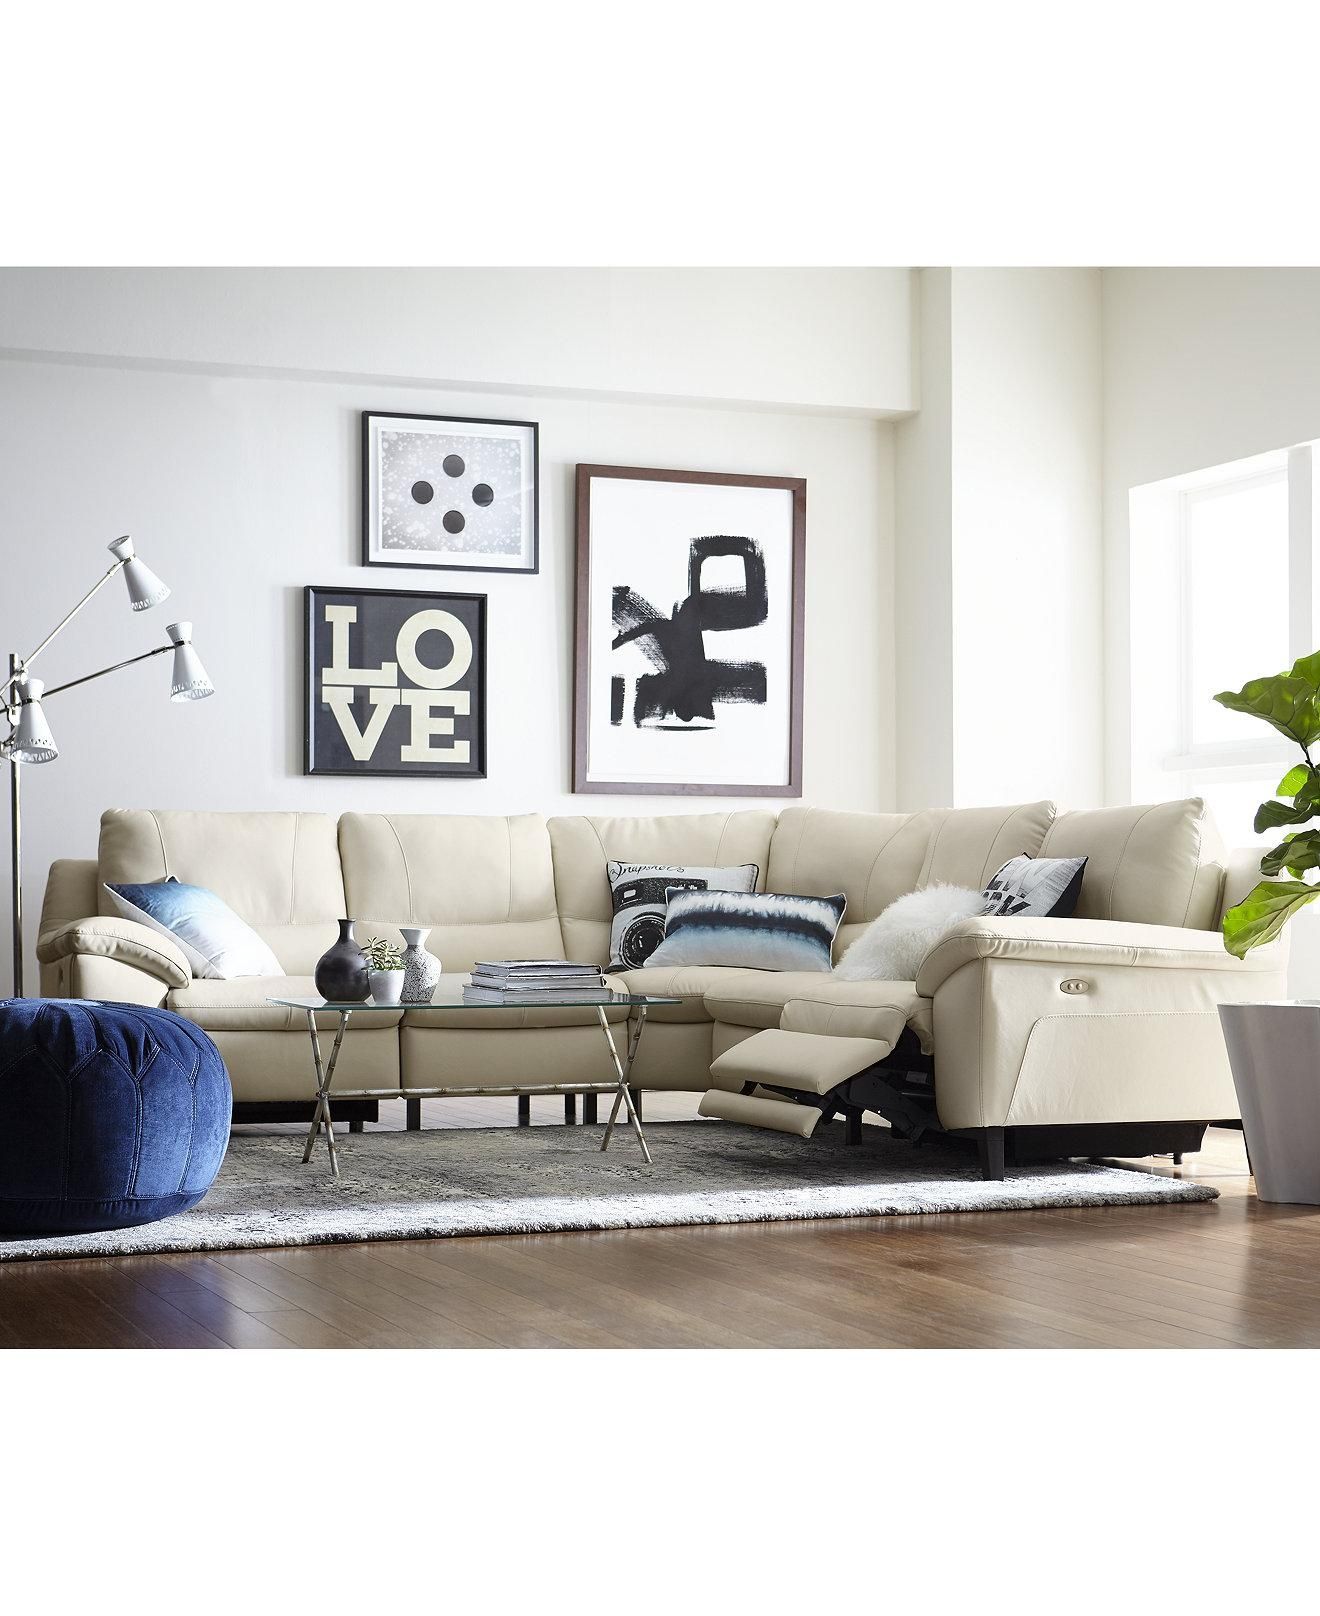 Sofas: Elegant Living Room Sofas Designmacys Sectional Sofa Intended For Macys Leather Sectional Sofa (View 17 of 20)